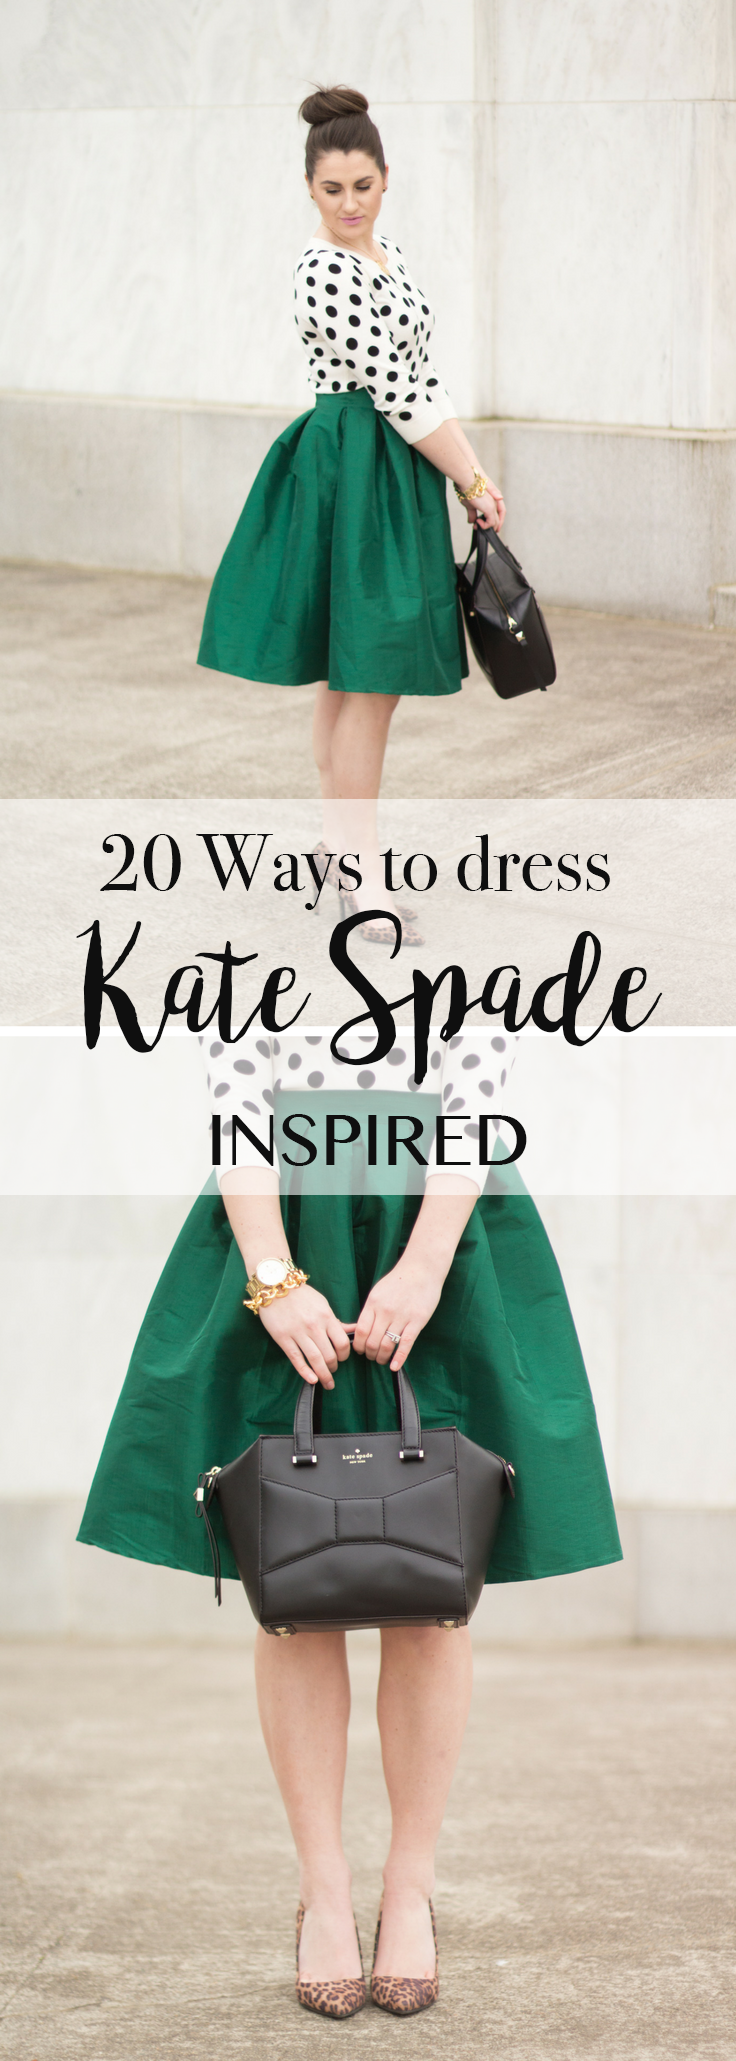 20 ways to dress Kate Spade inspired!